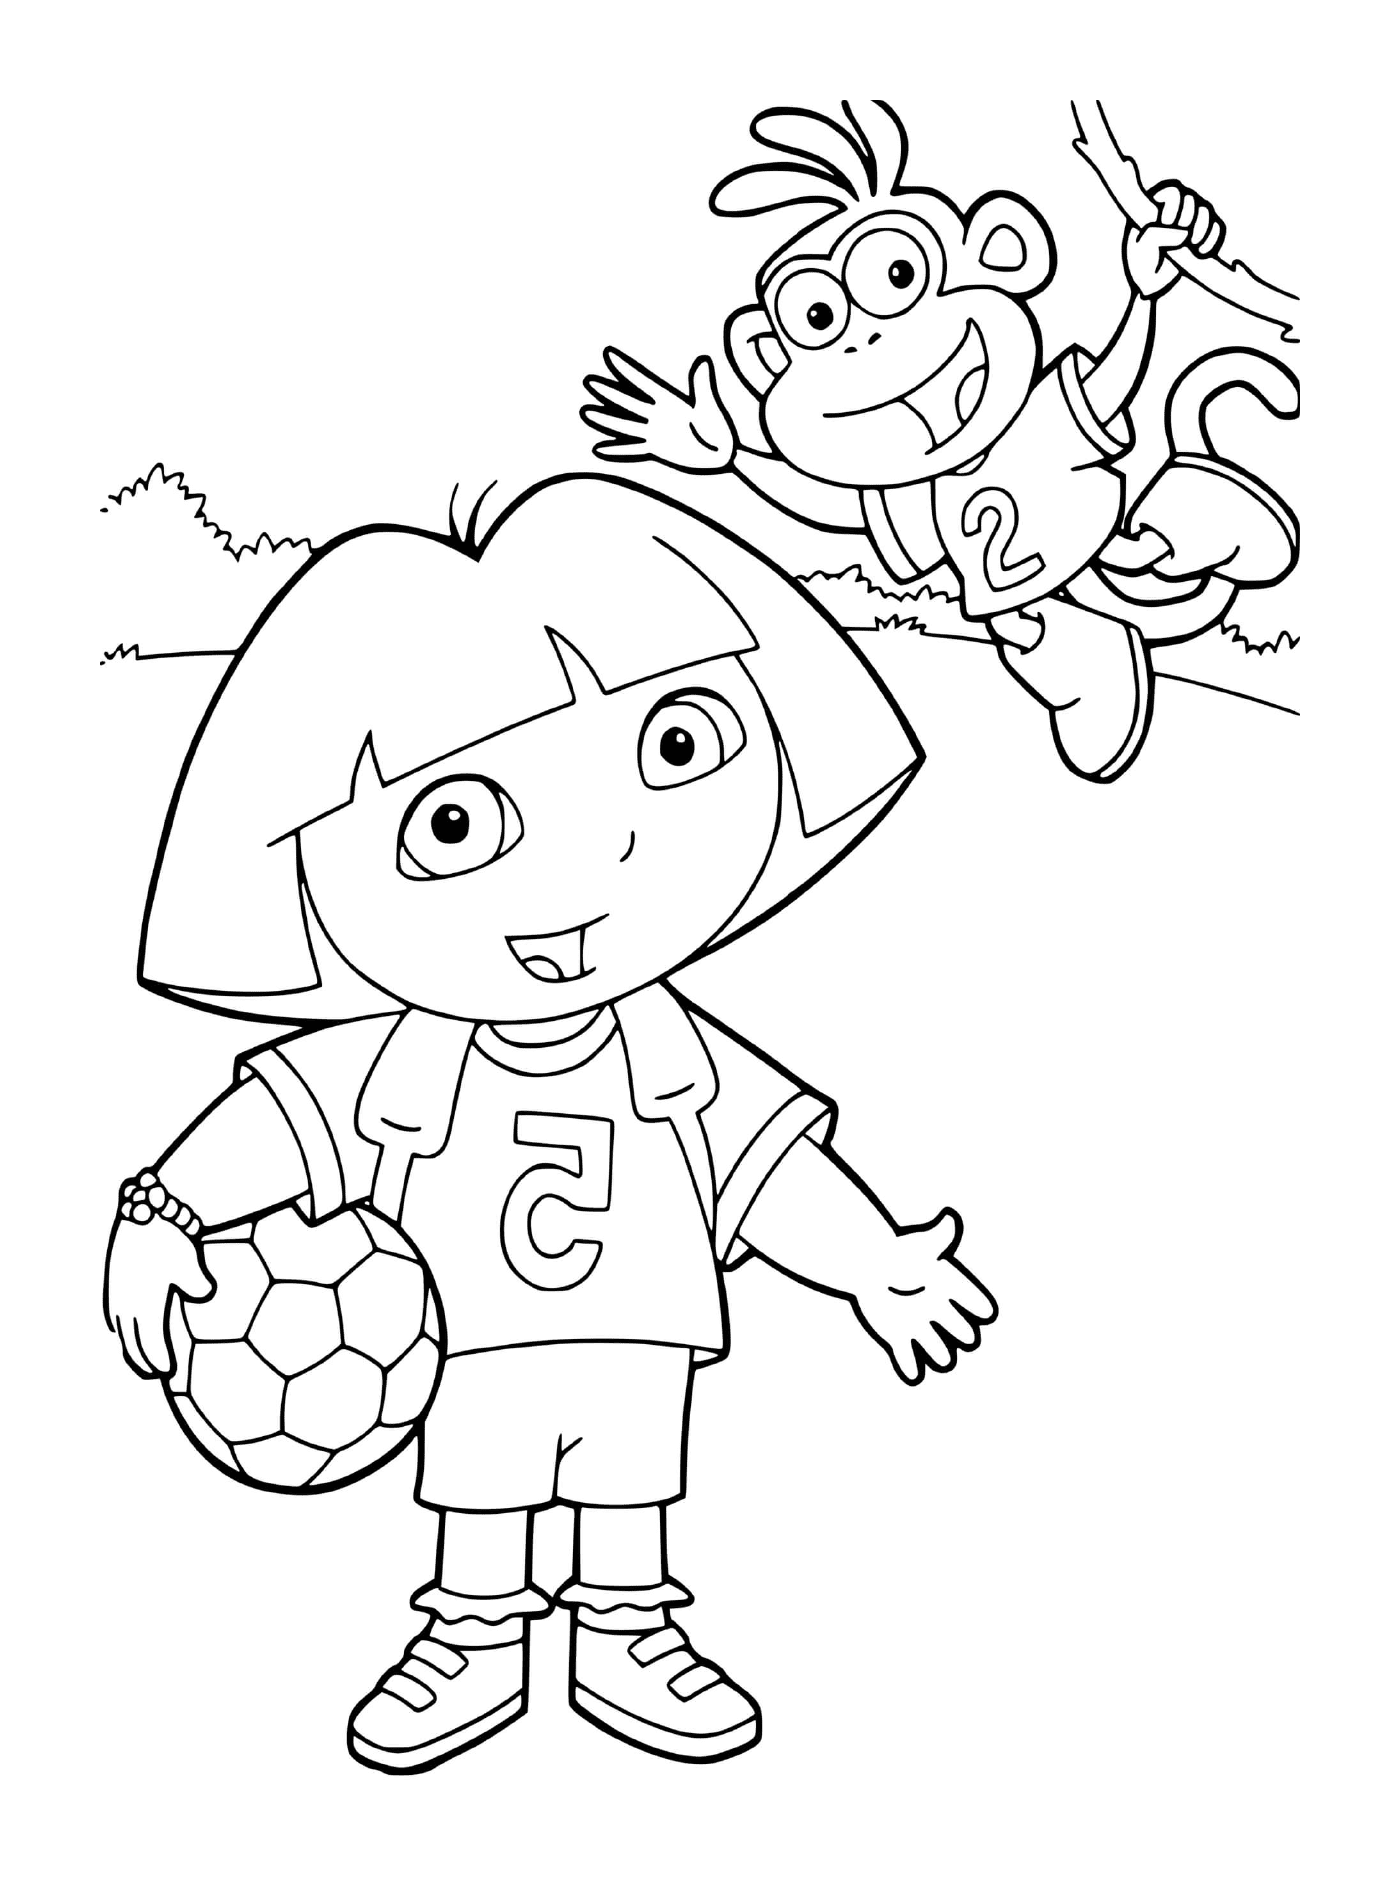  Dora plays football with Babouche on their team 